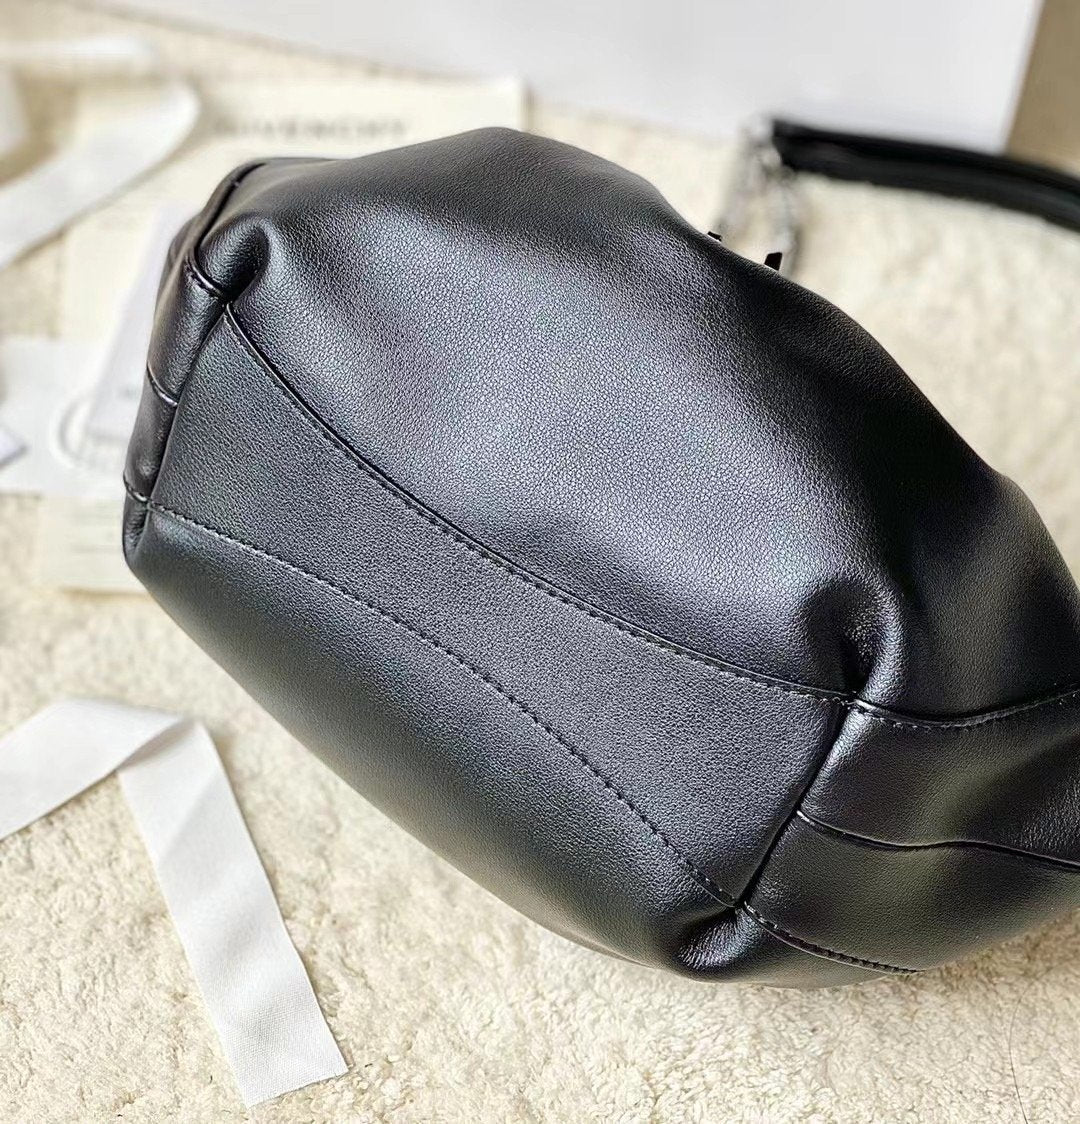 gv Small Kenny Bag Black For Women, Handbags, Shoulder Bags 12.6in/32cm BB50MJB1DM-001